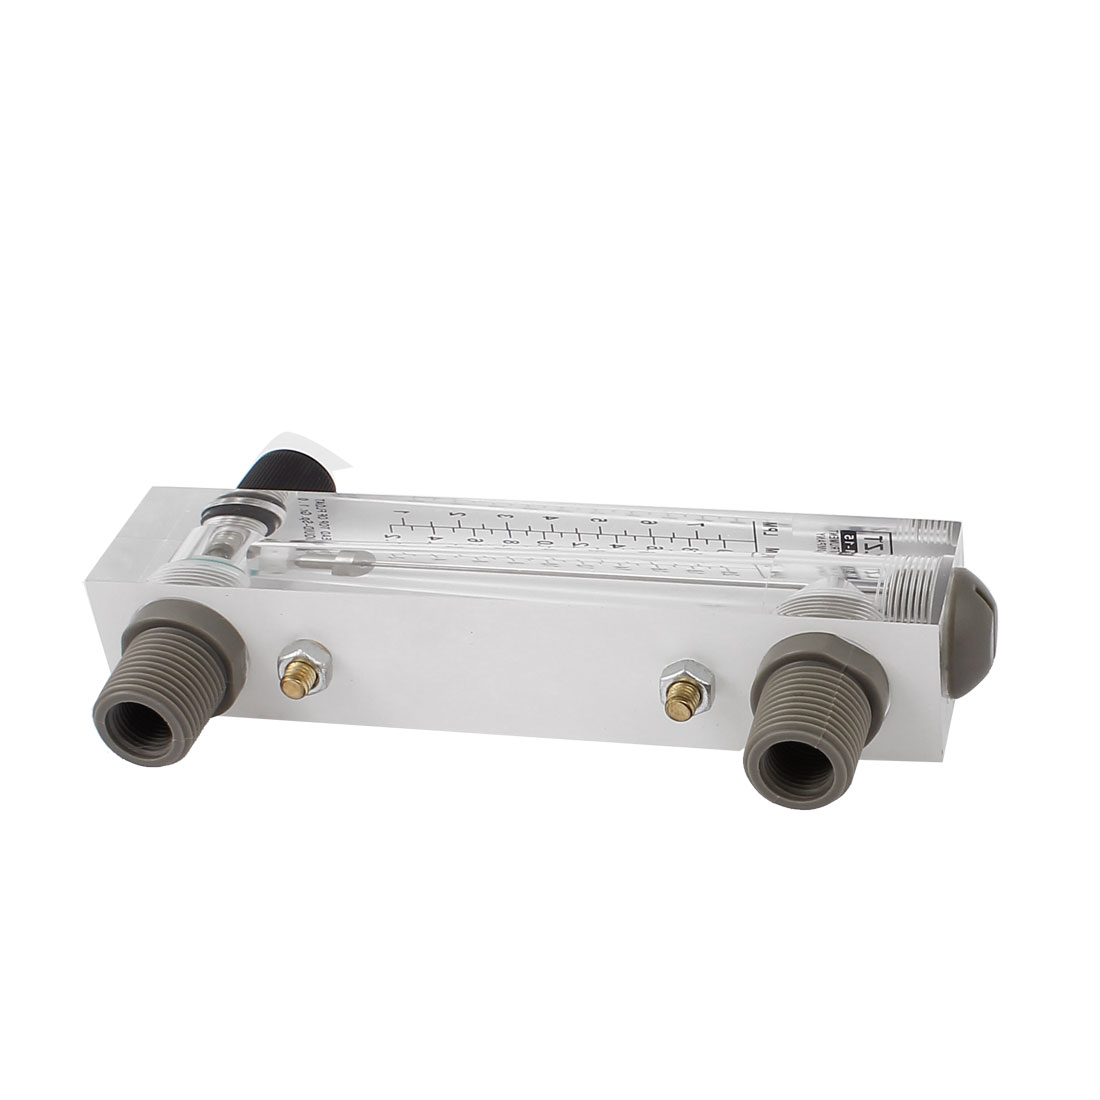 LZT M-15 2.0 GPM 1/2BSP Water Liquid Flow Measuring Panel Type Flowmeter - image 2 of 4